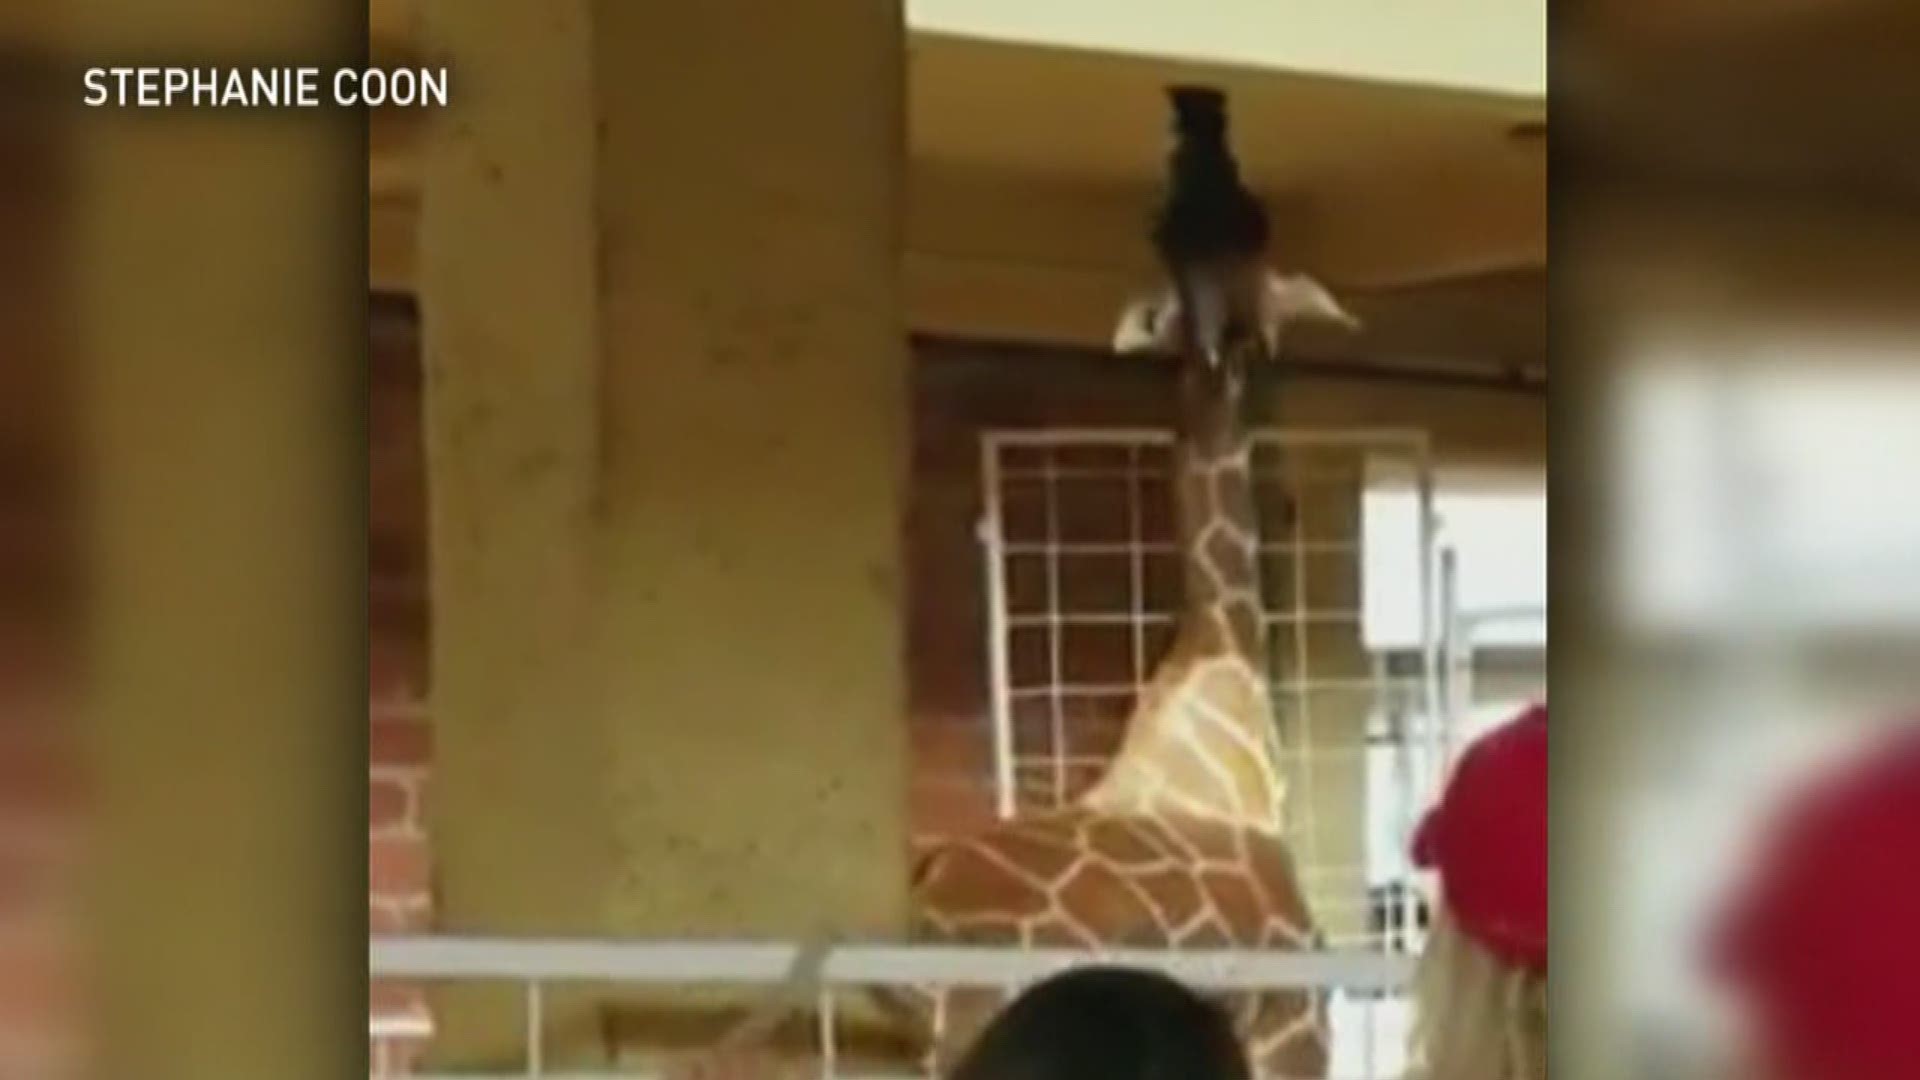 Giraffe behavior concerns State Fair of Texas goers